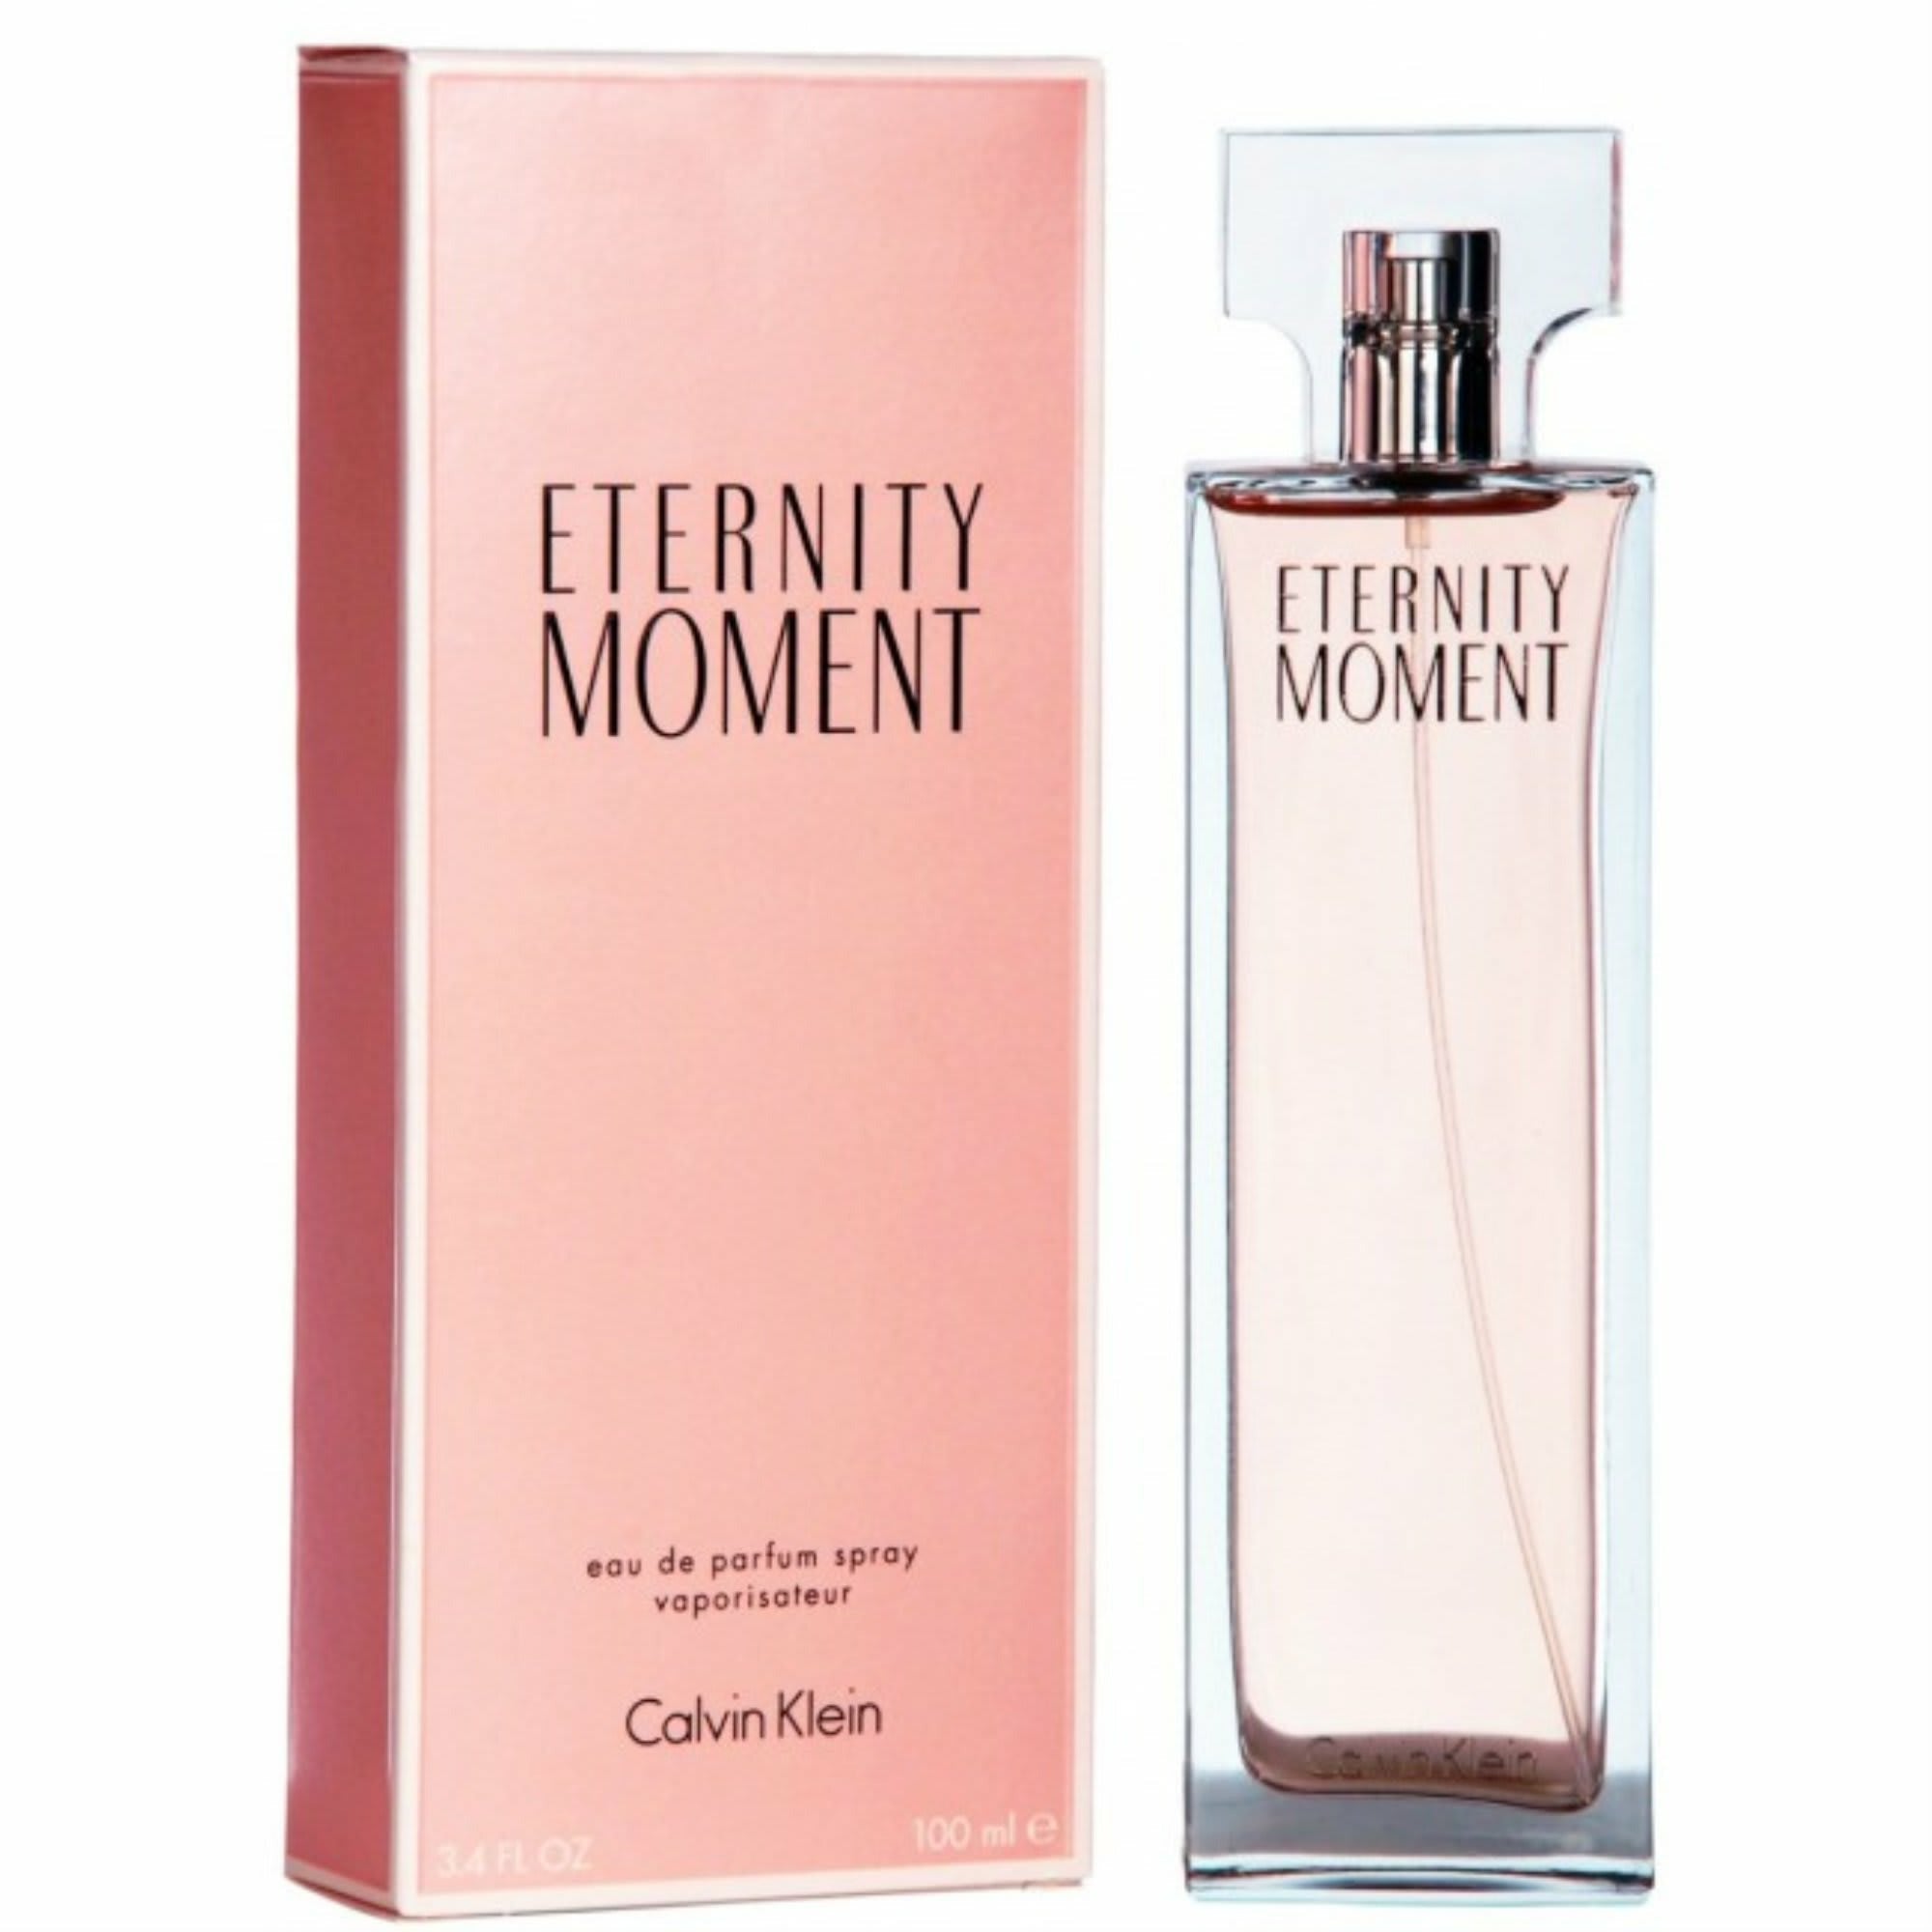 eternity-moment-perfume